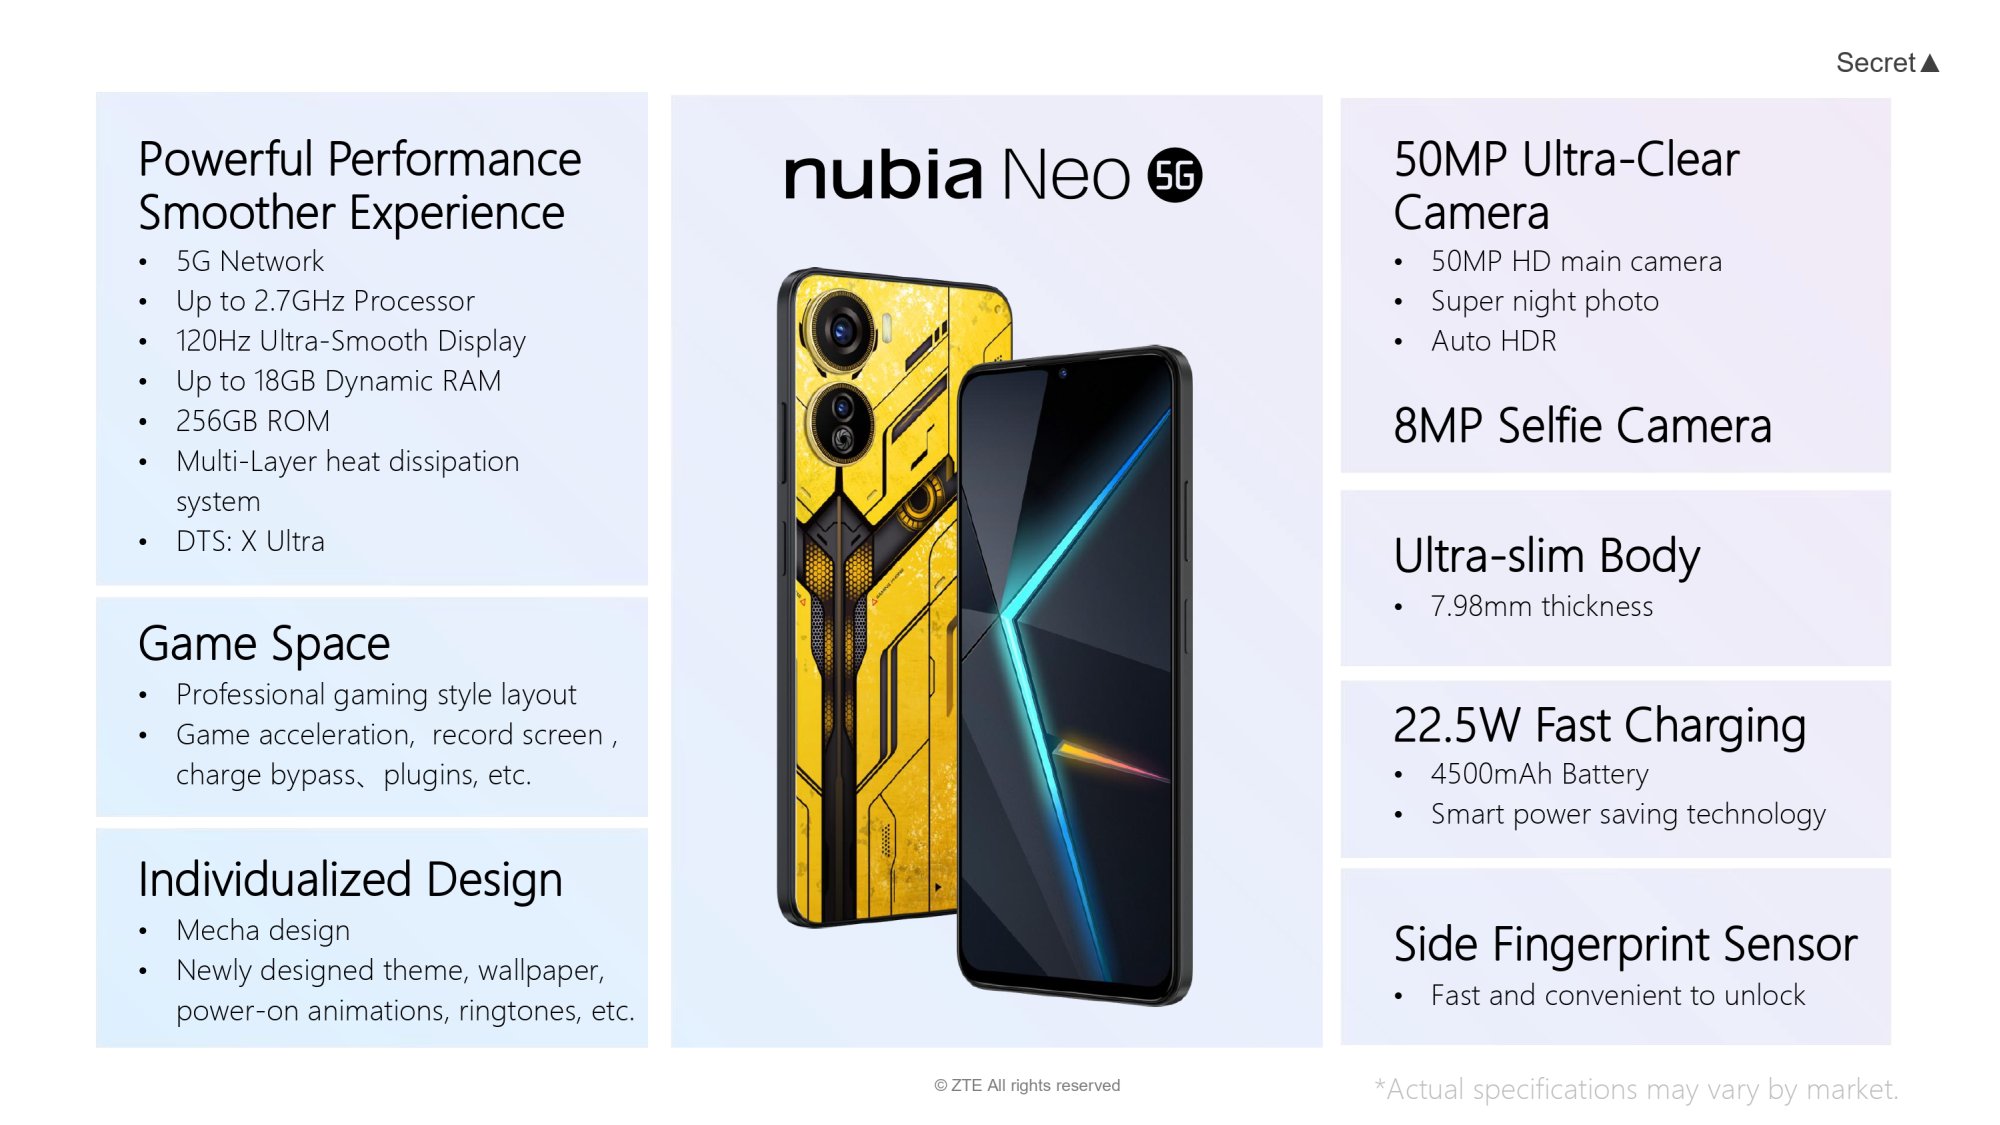 Nubia Neo 5G hadir ke pasaran Malaysia, telefon gaming bawah RM1,000 lengkap dengan “Game Space" - SoyaCincau.com